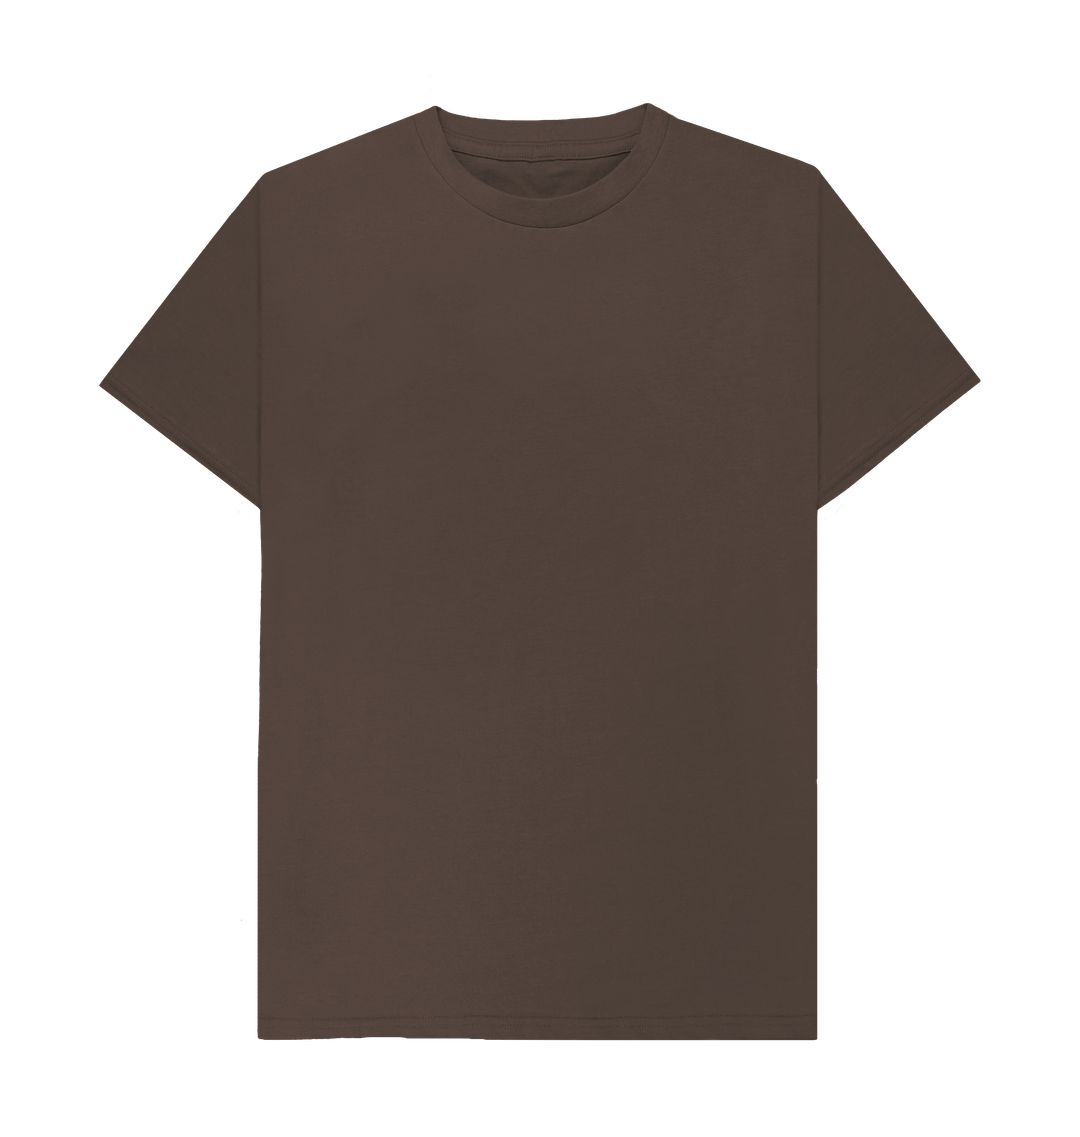 Chocolate Men's organic cotton t-shirt